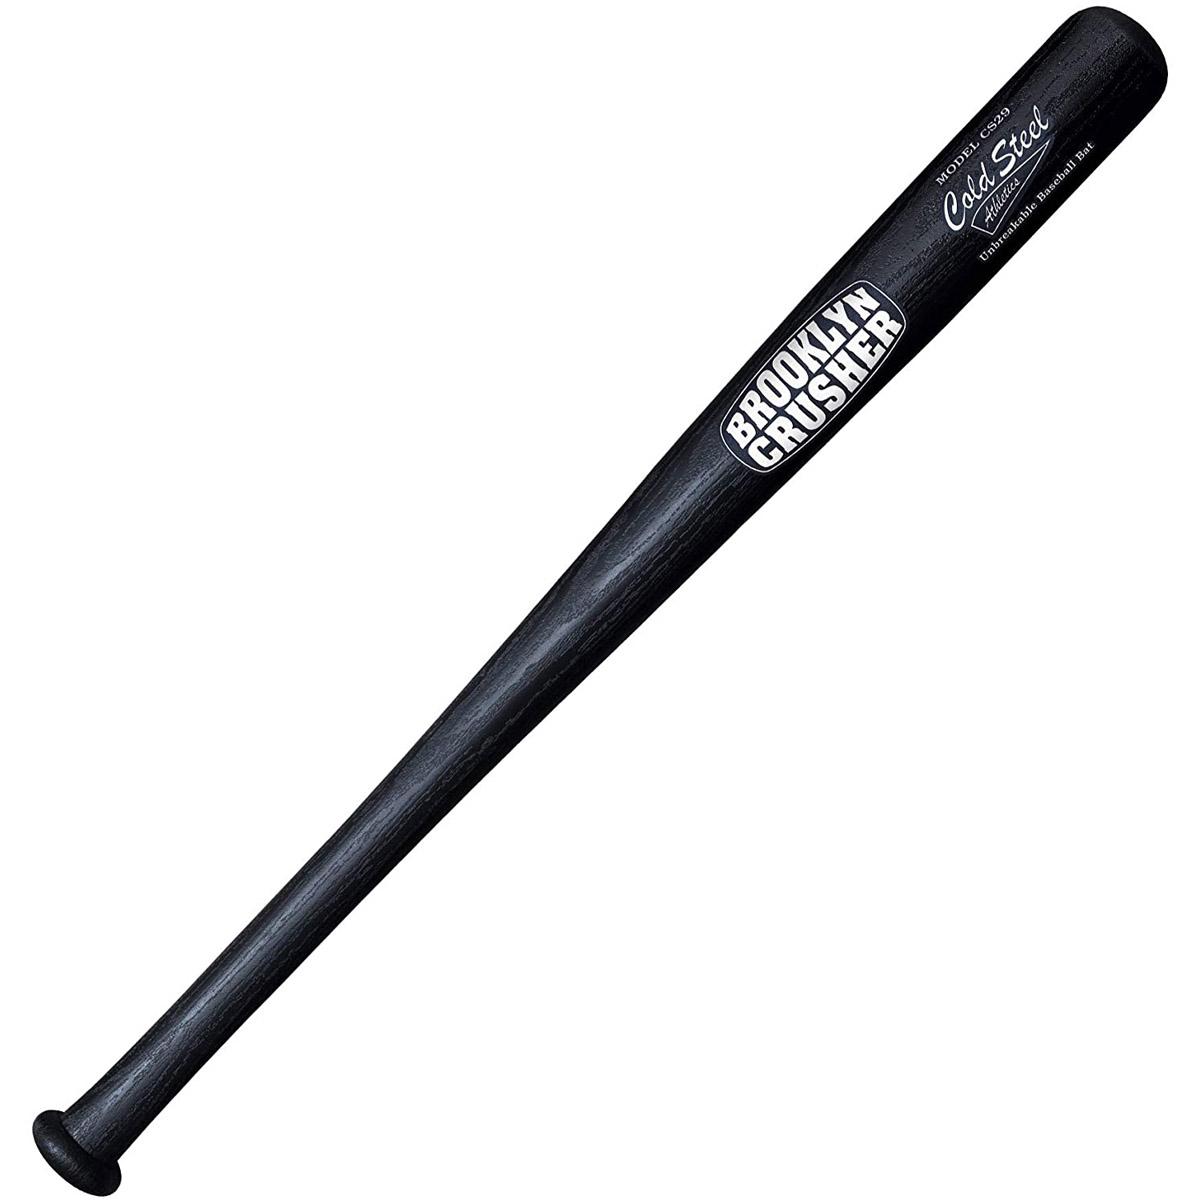 29in Cold Steel Brooklyn Crusher Defense Baseball Bat for $17.19